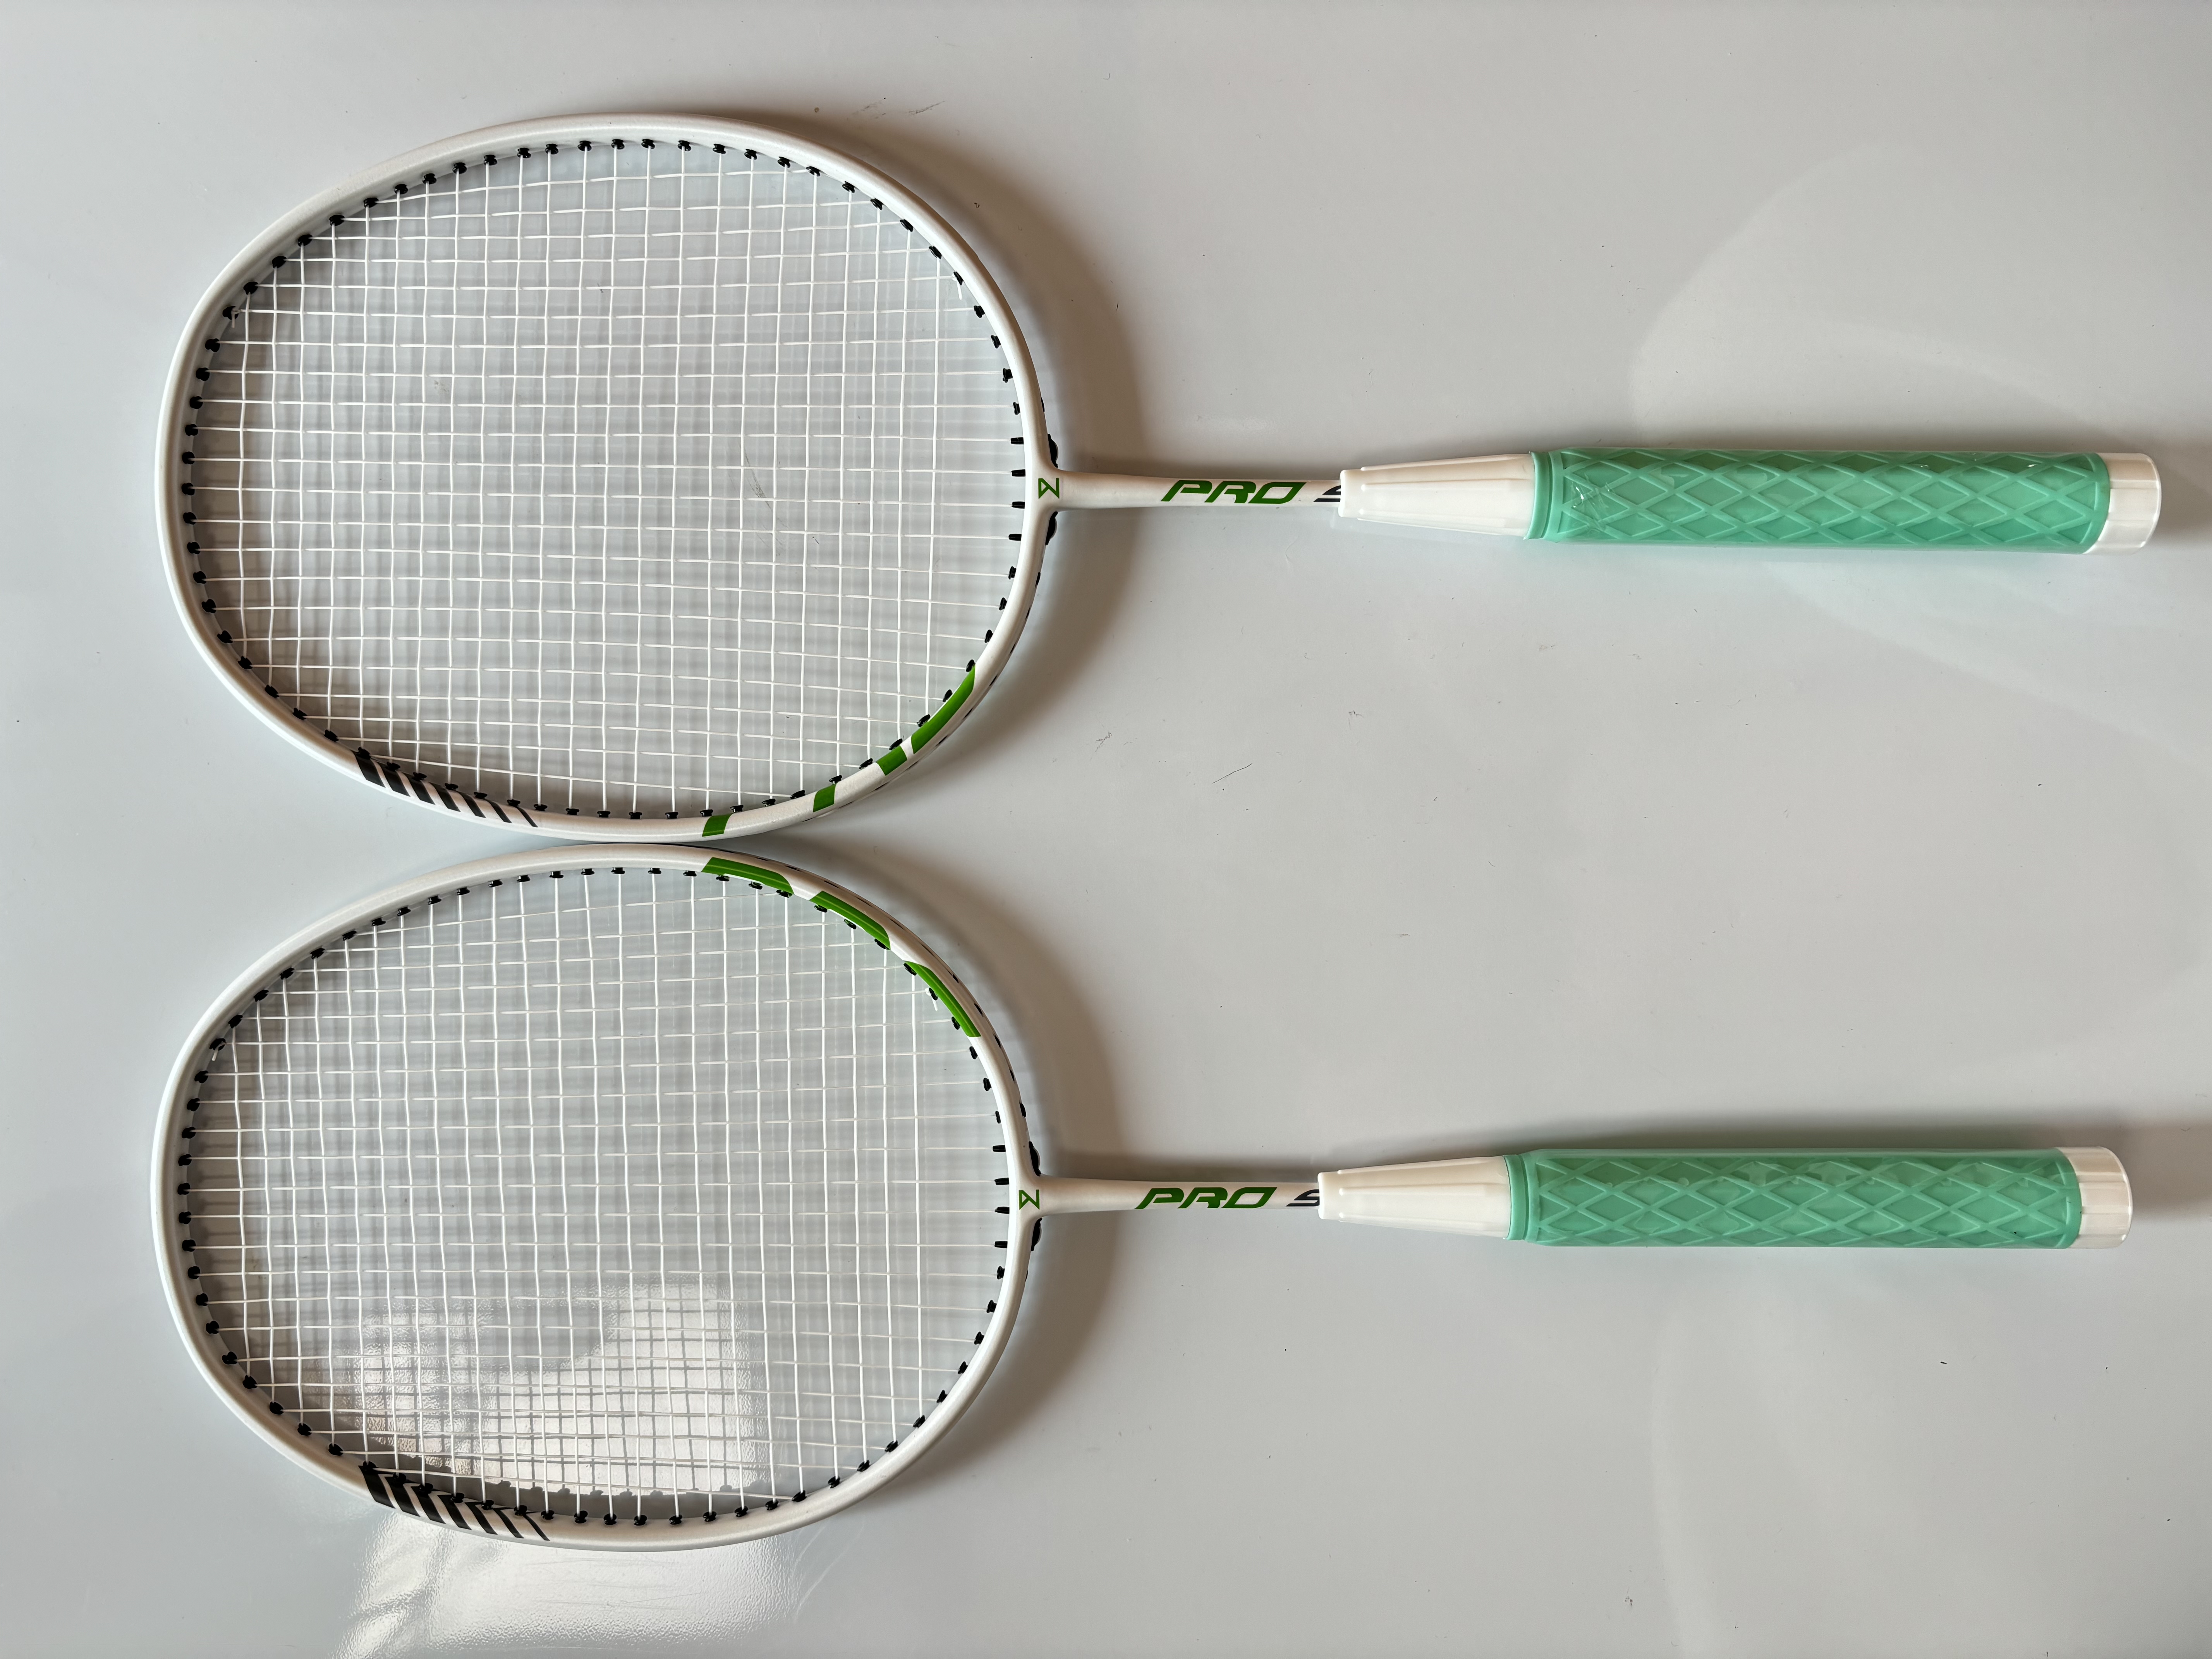 Hot sales for one piece adjustable badminton racket